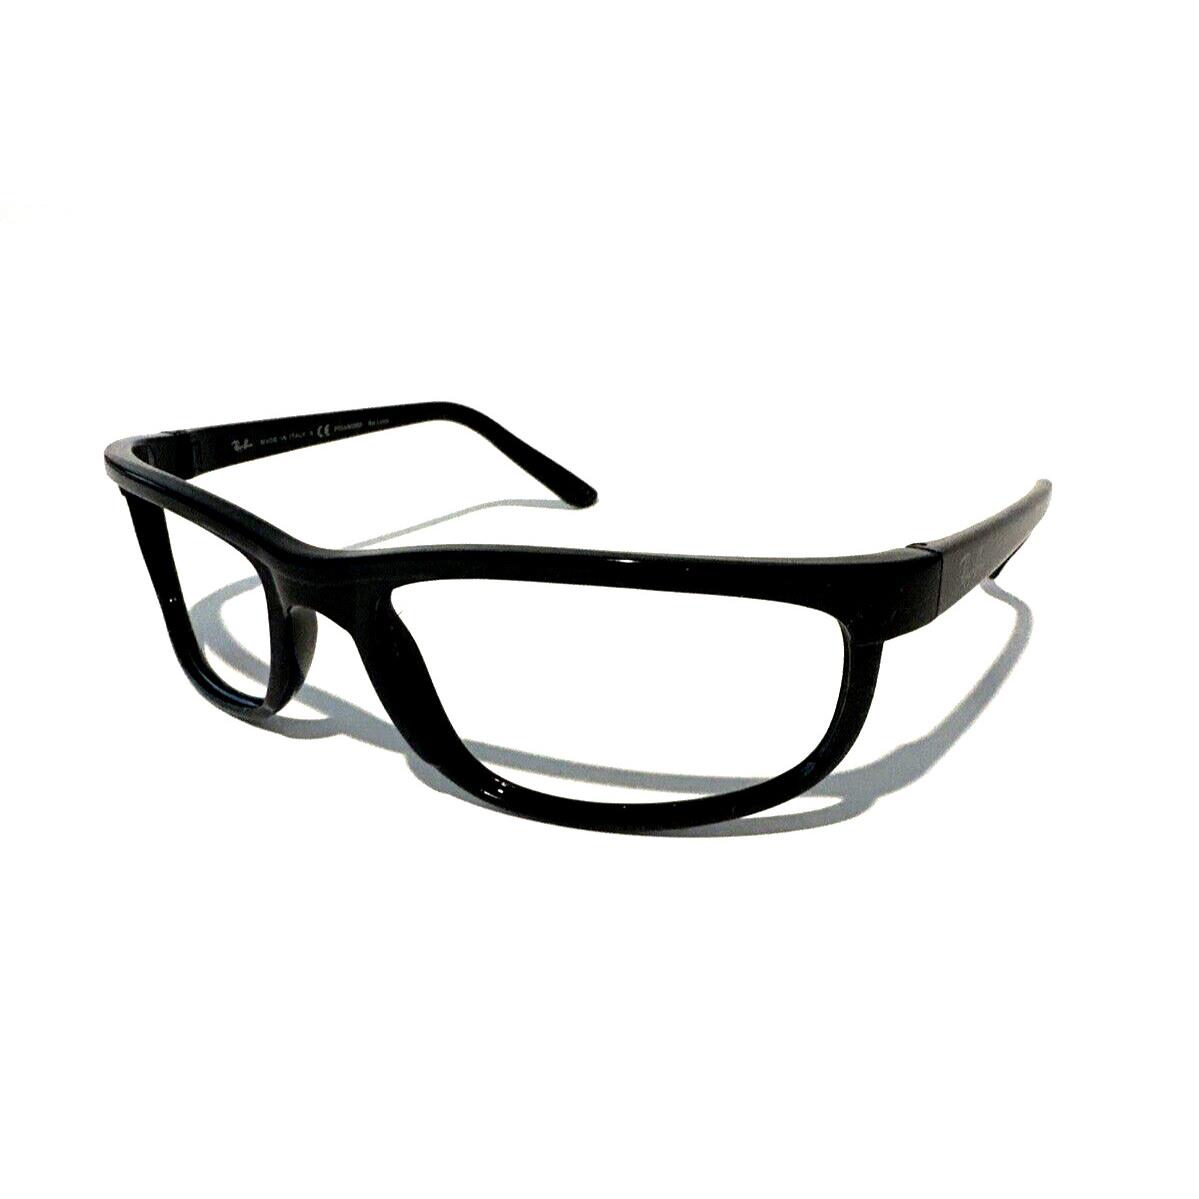 Rayban Eyelgasses Sunglasses 2027 Frames Only